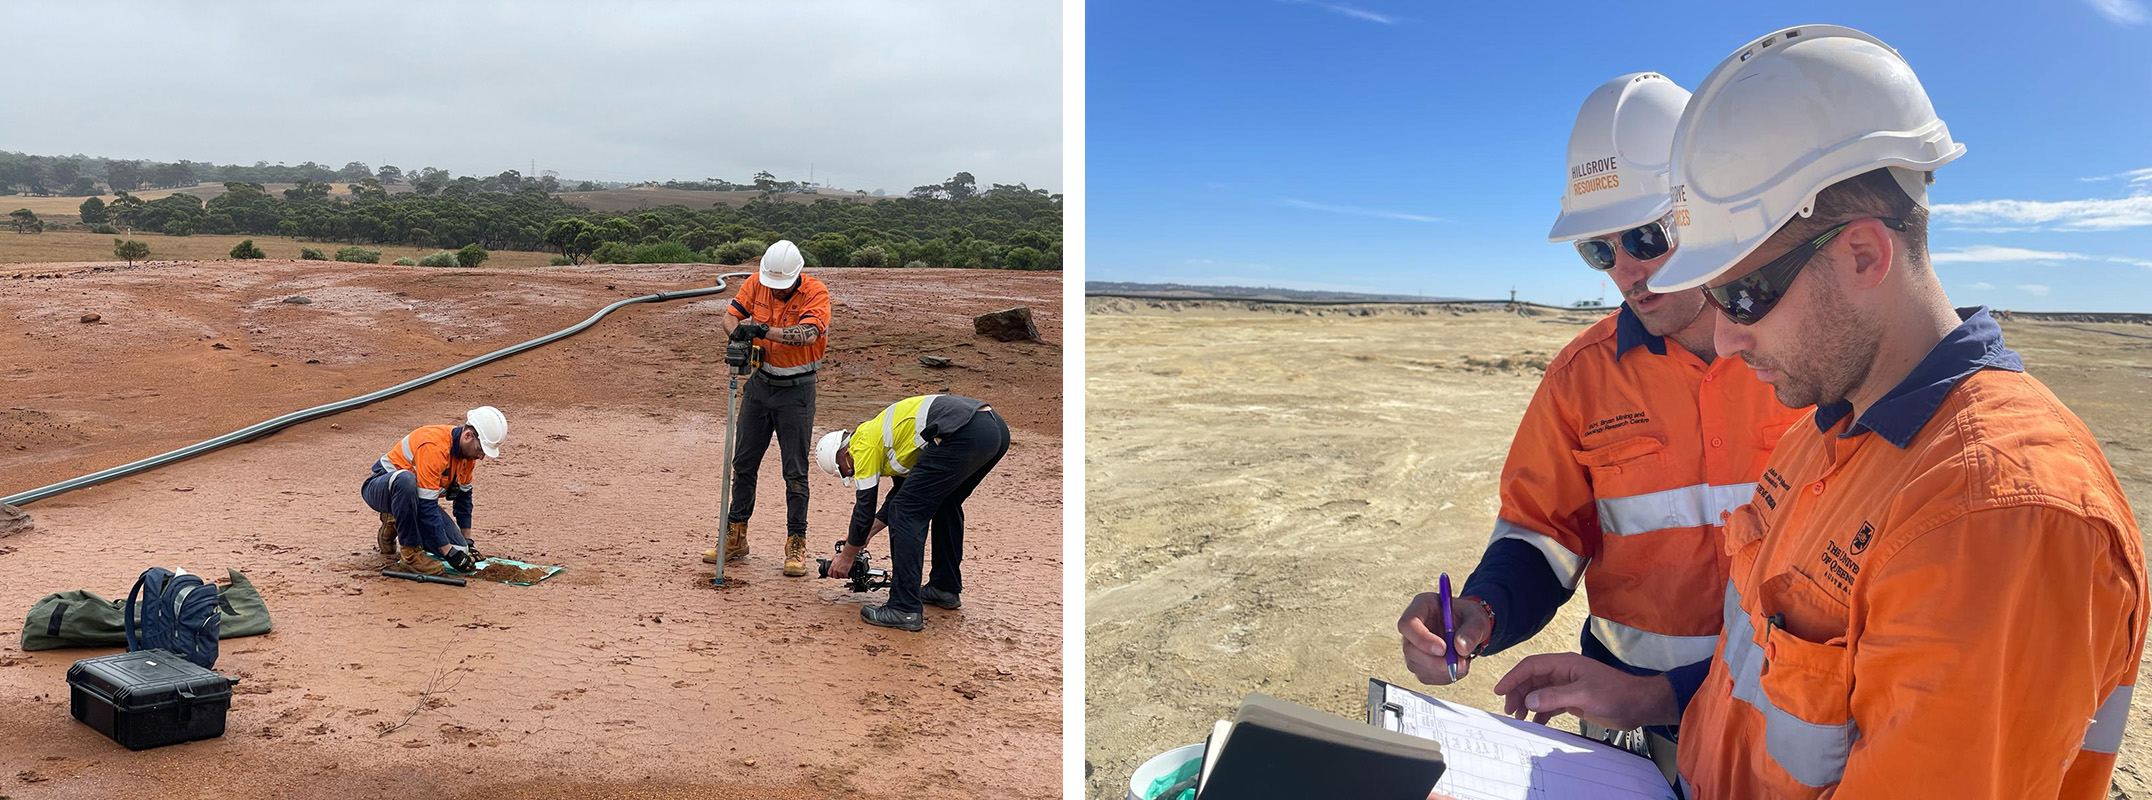 Francesco Colombi doing sampling fieldwork at the Kanmantoo copper (Cu) mine site, South Australia 